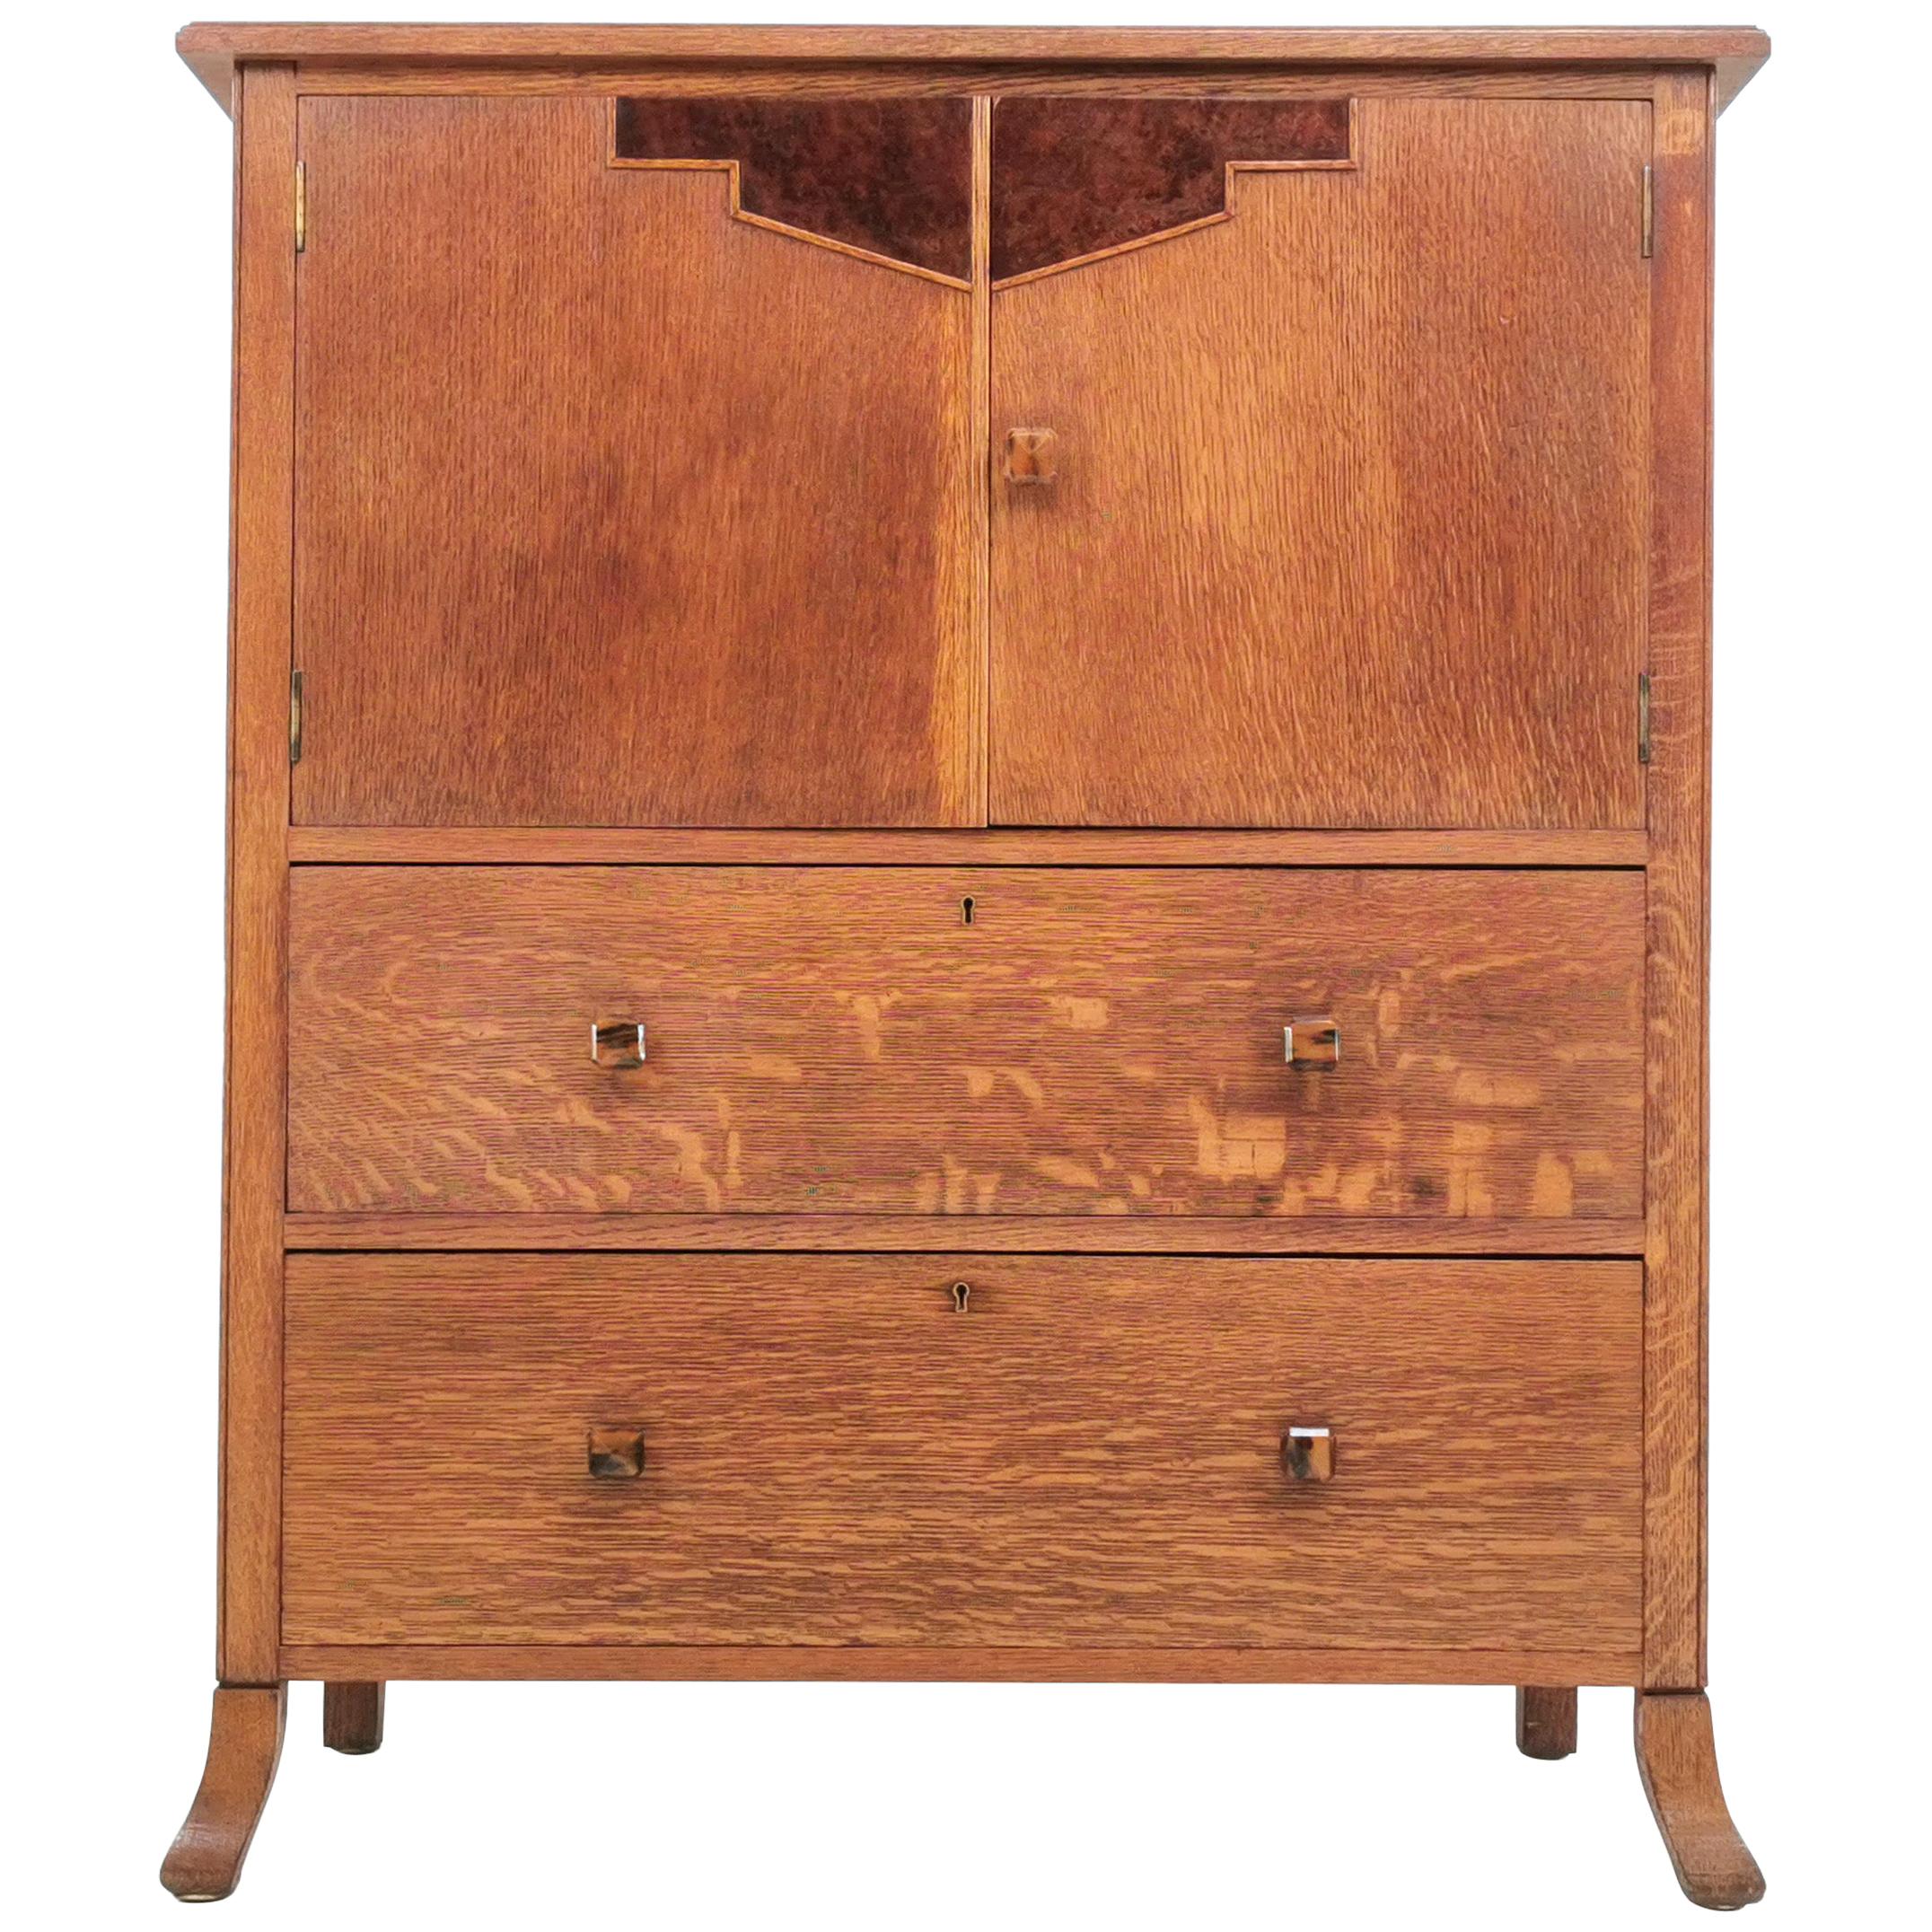 Vintage Art Deco British Oak Maple & Co Tallboy Compactum Chest of Drawers